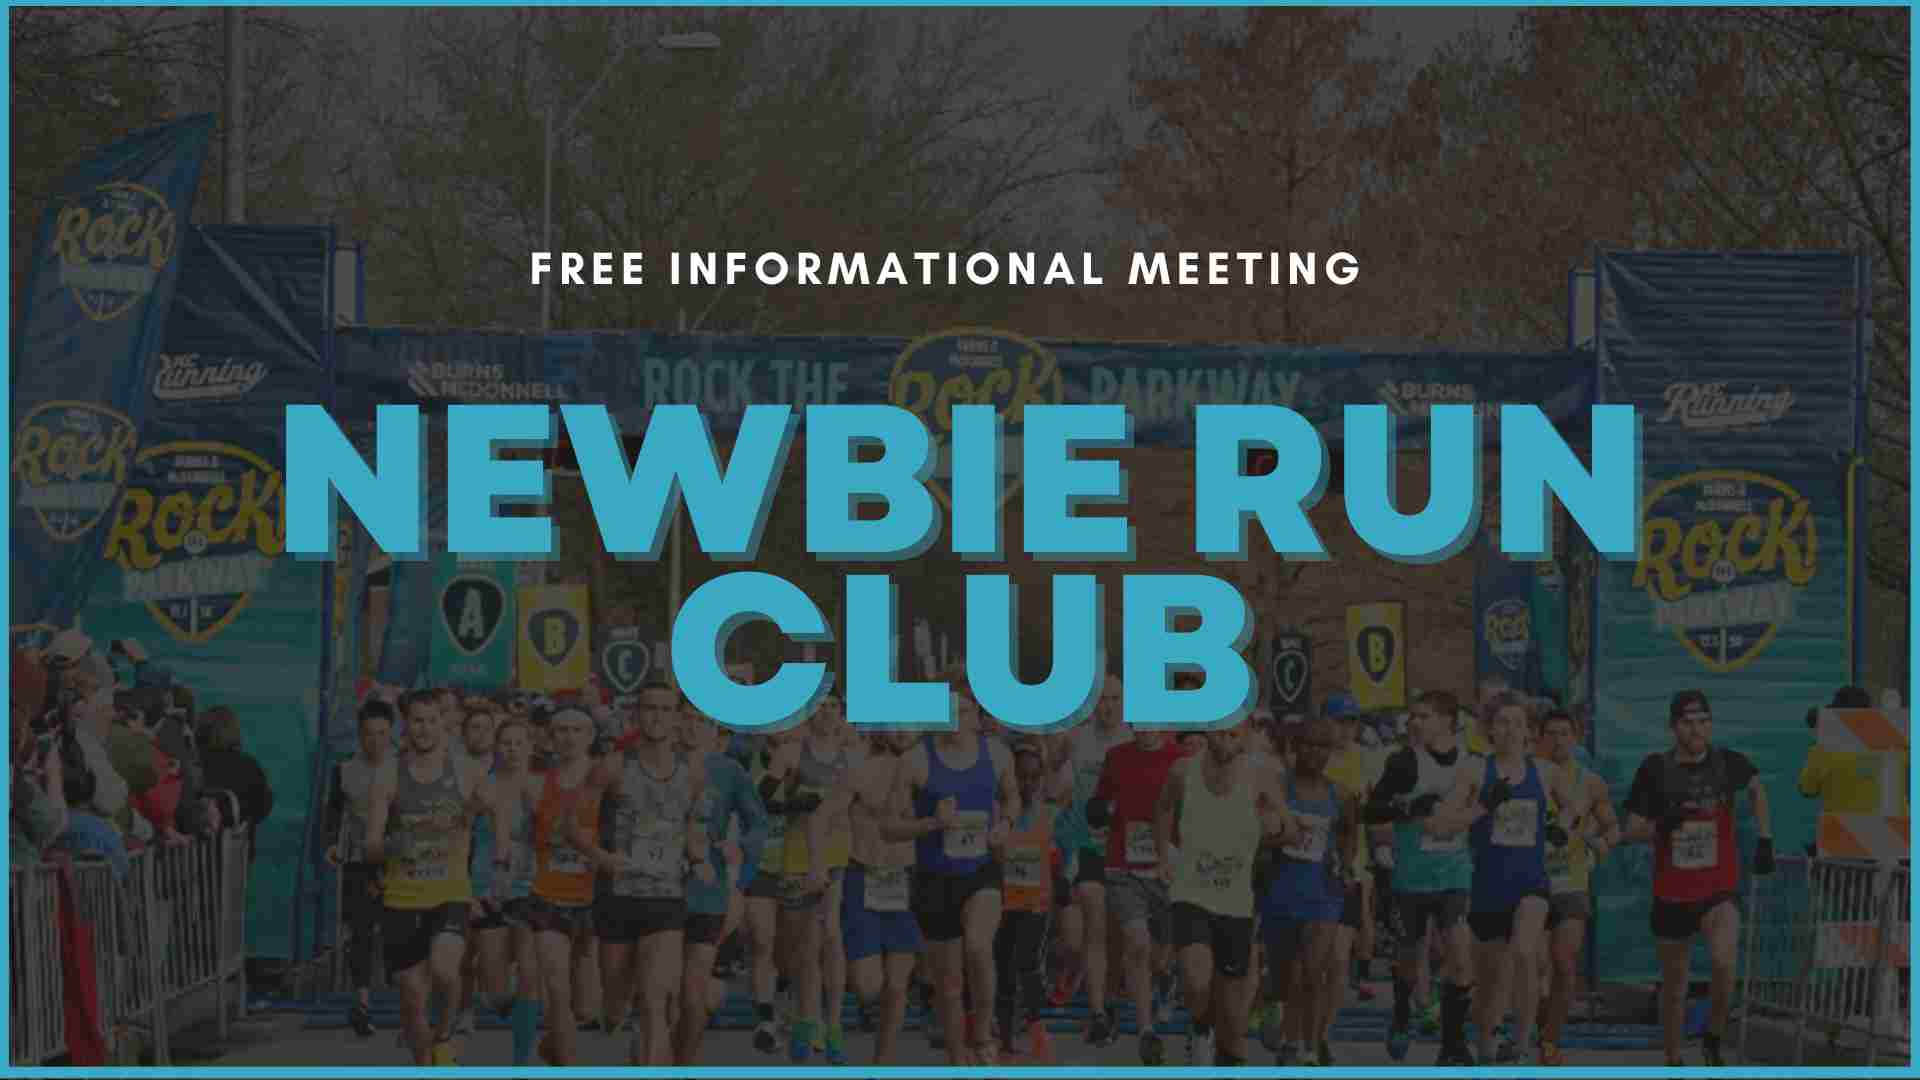 Newbie Run Club a Couch to 5k Training